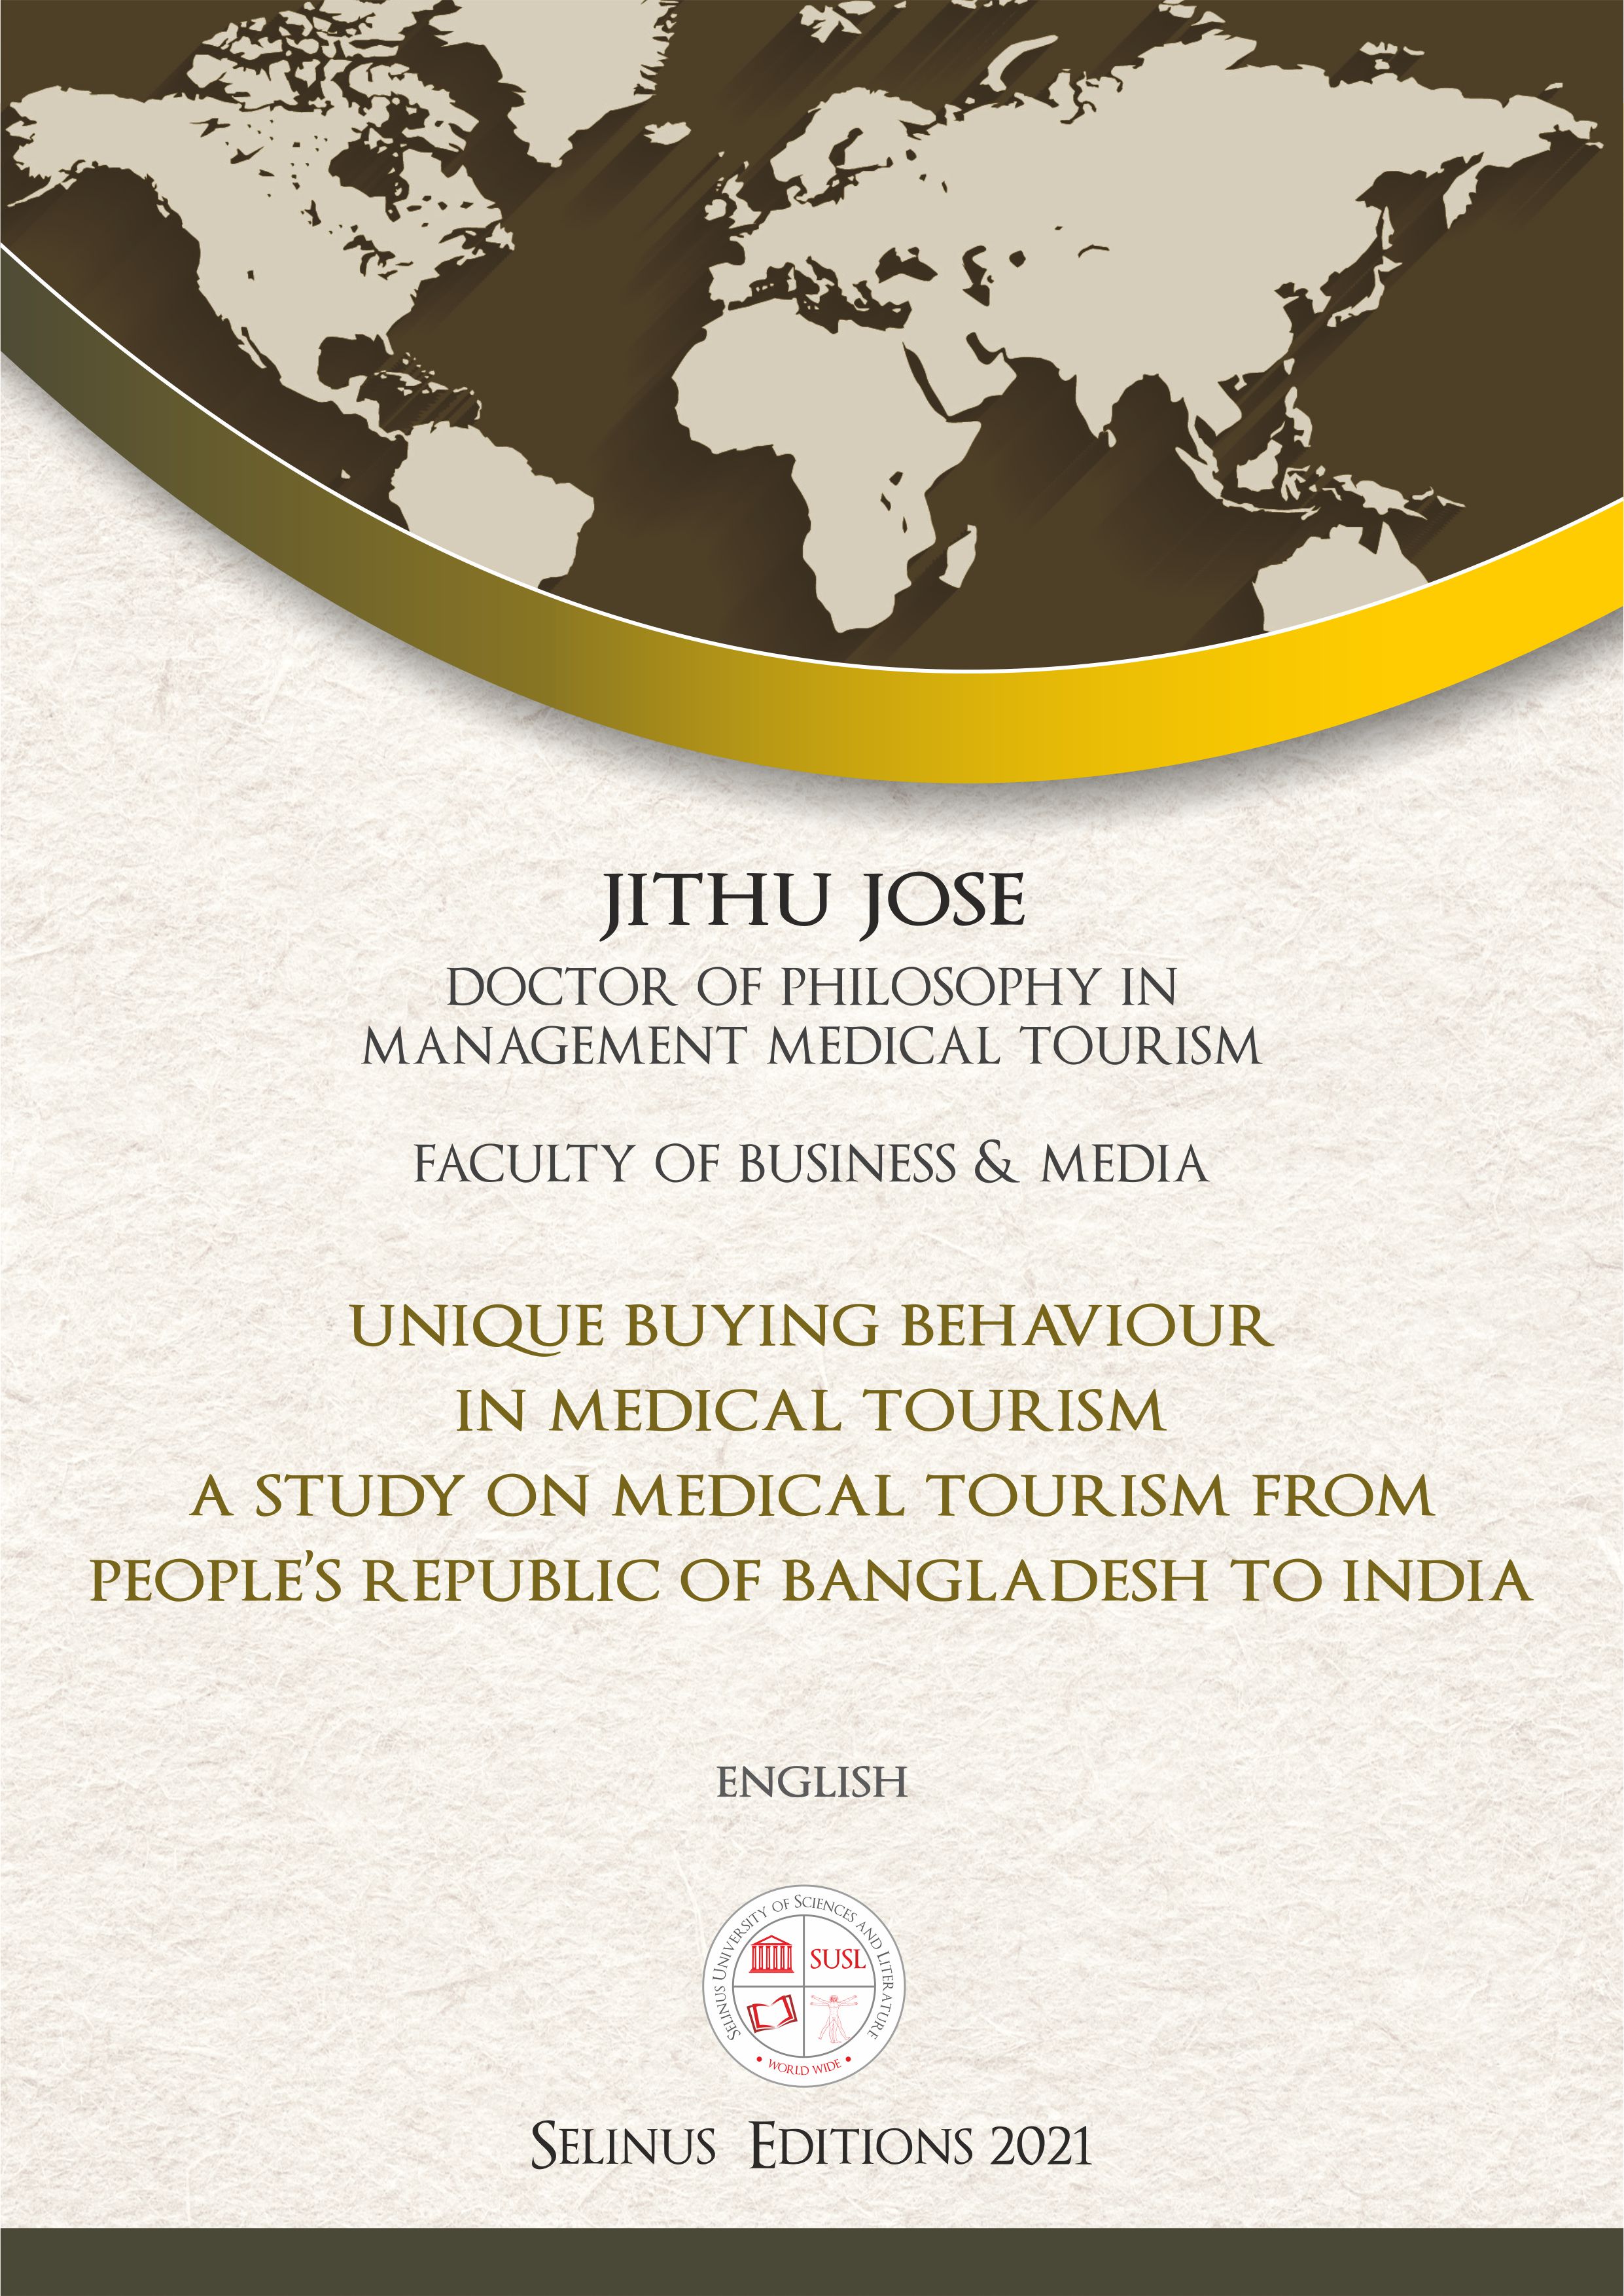 Thesis Jithu Jose